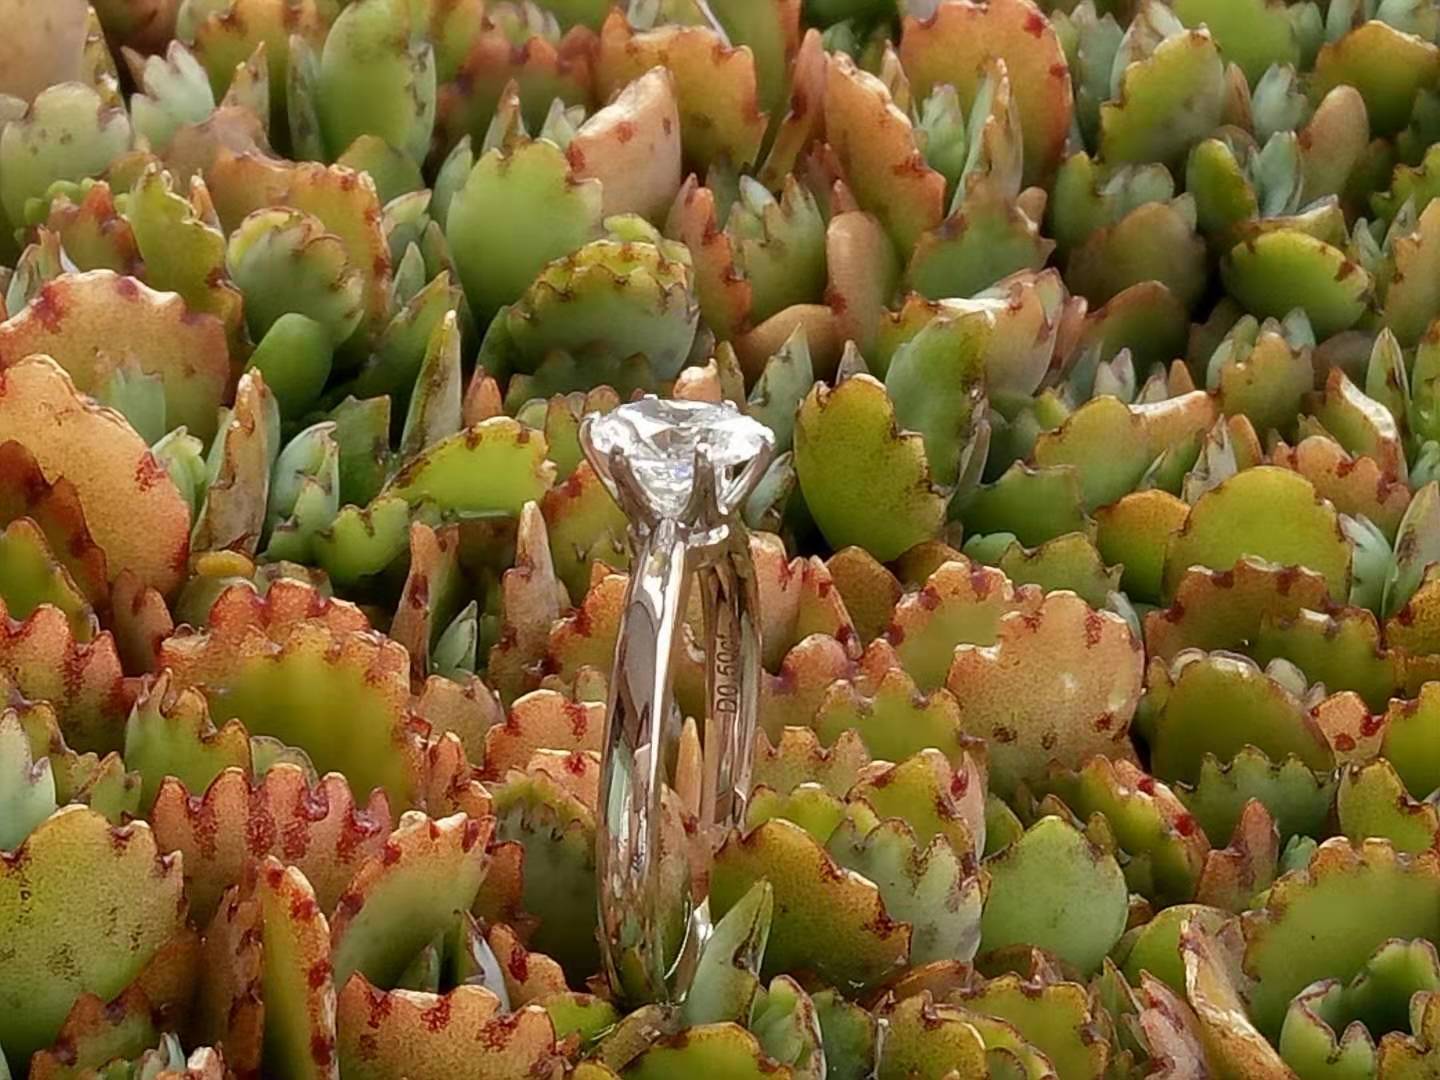 doveggs lab created CVD diamond engagement ring 14k-18k white gold 0.5 carat center 4.5x6mm def color oval diamond ring - DovEggs-Seattle